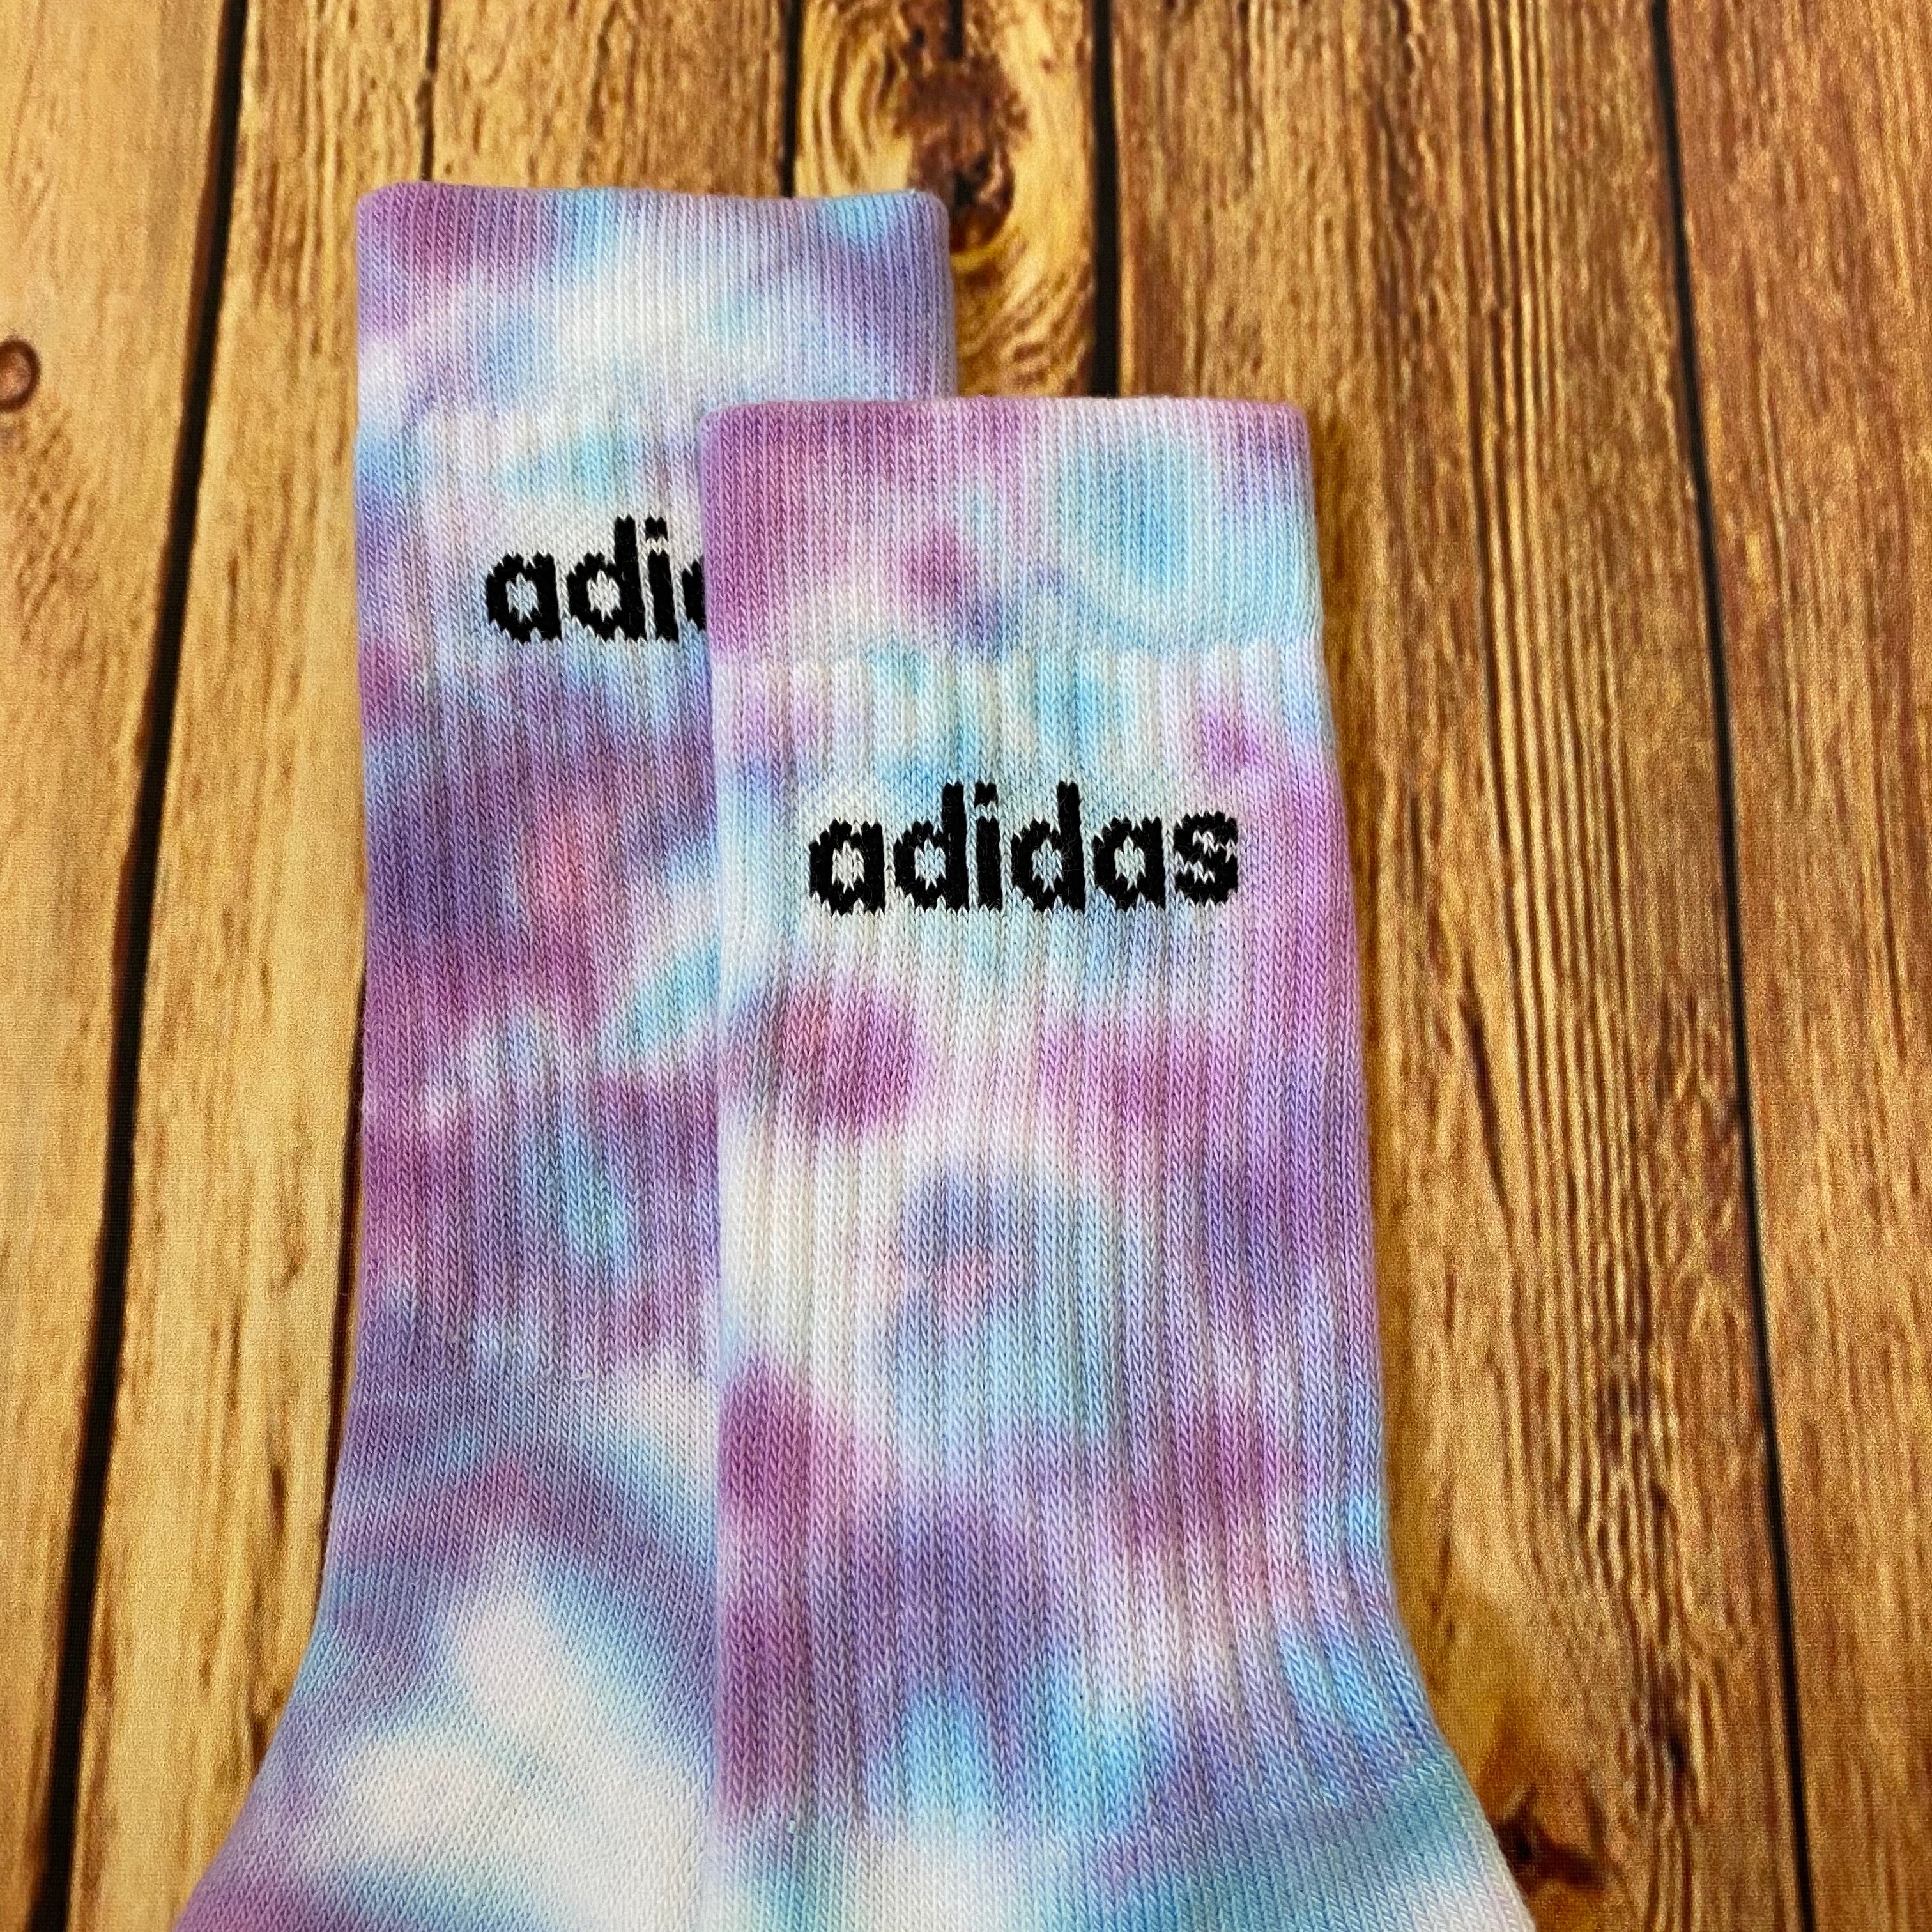 Adidas ‘Parma Violet’ Custom Dyed Socks